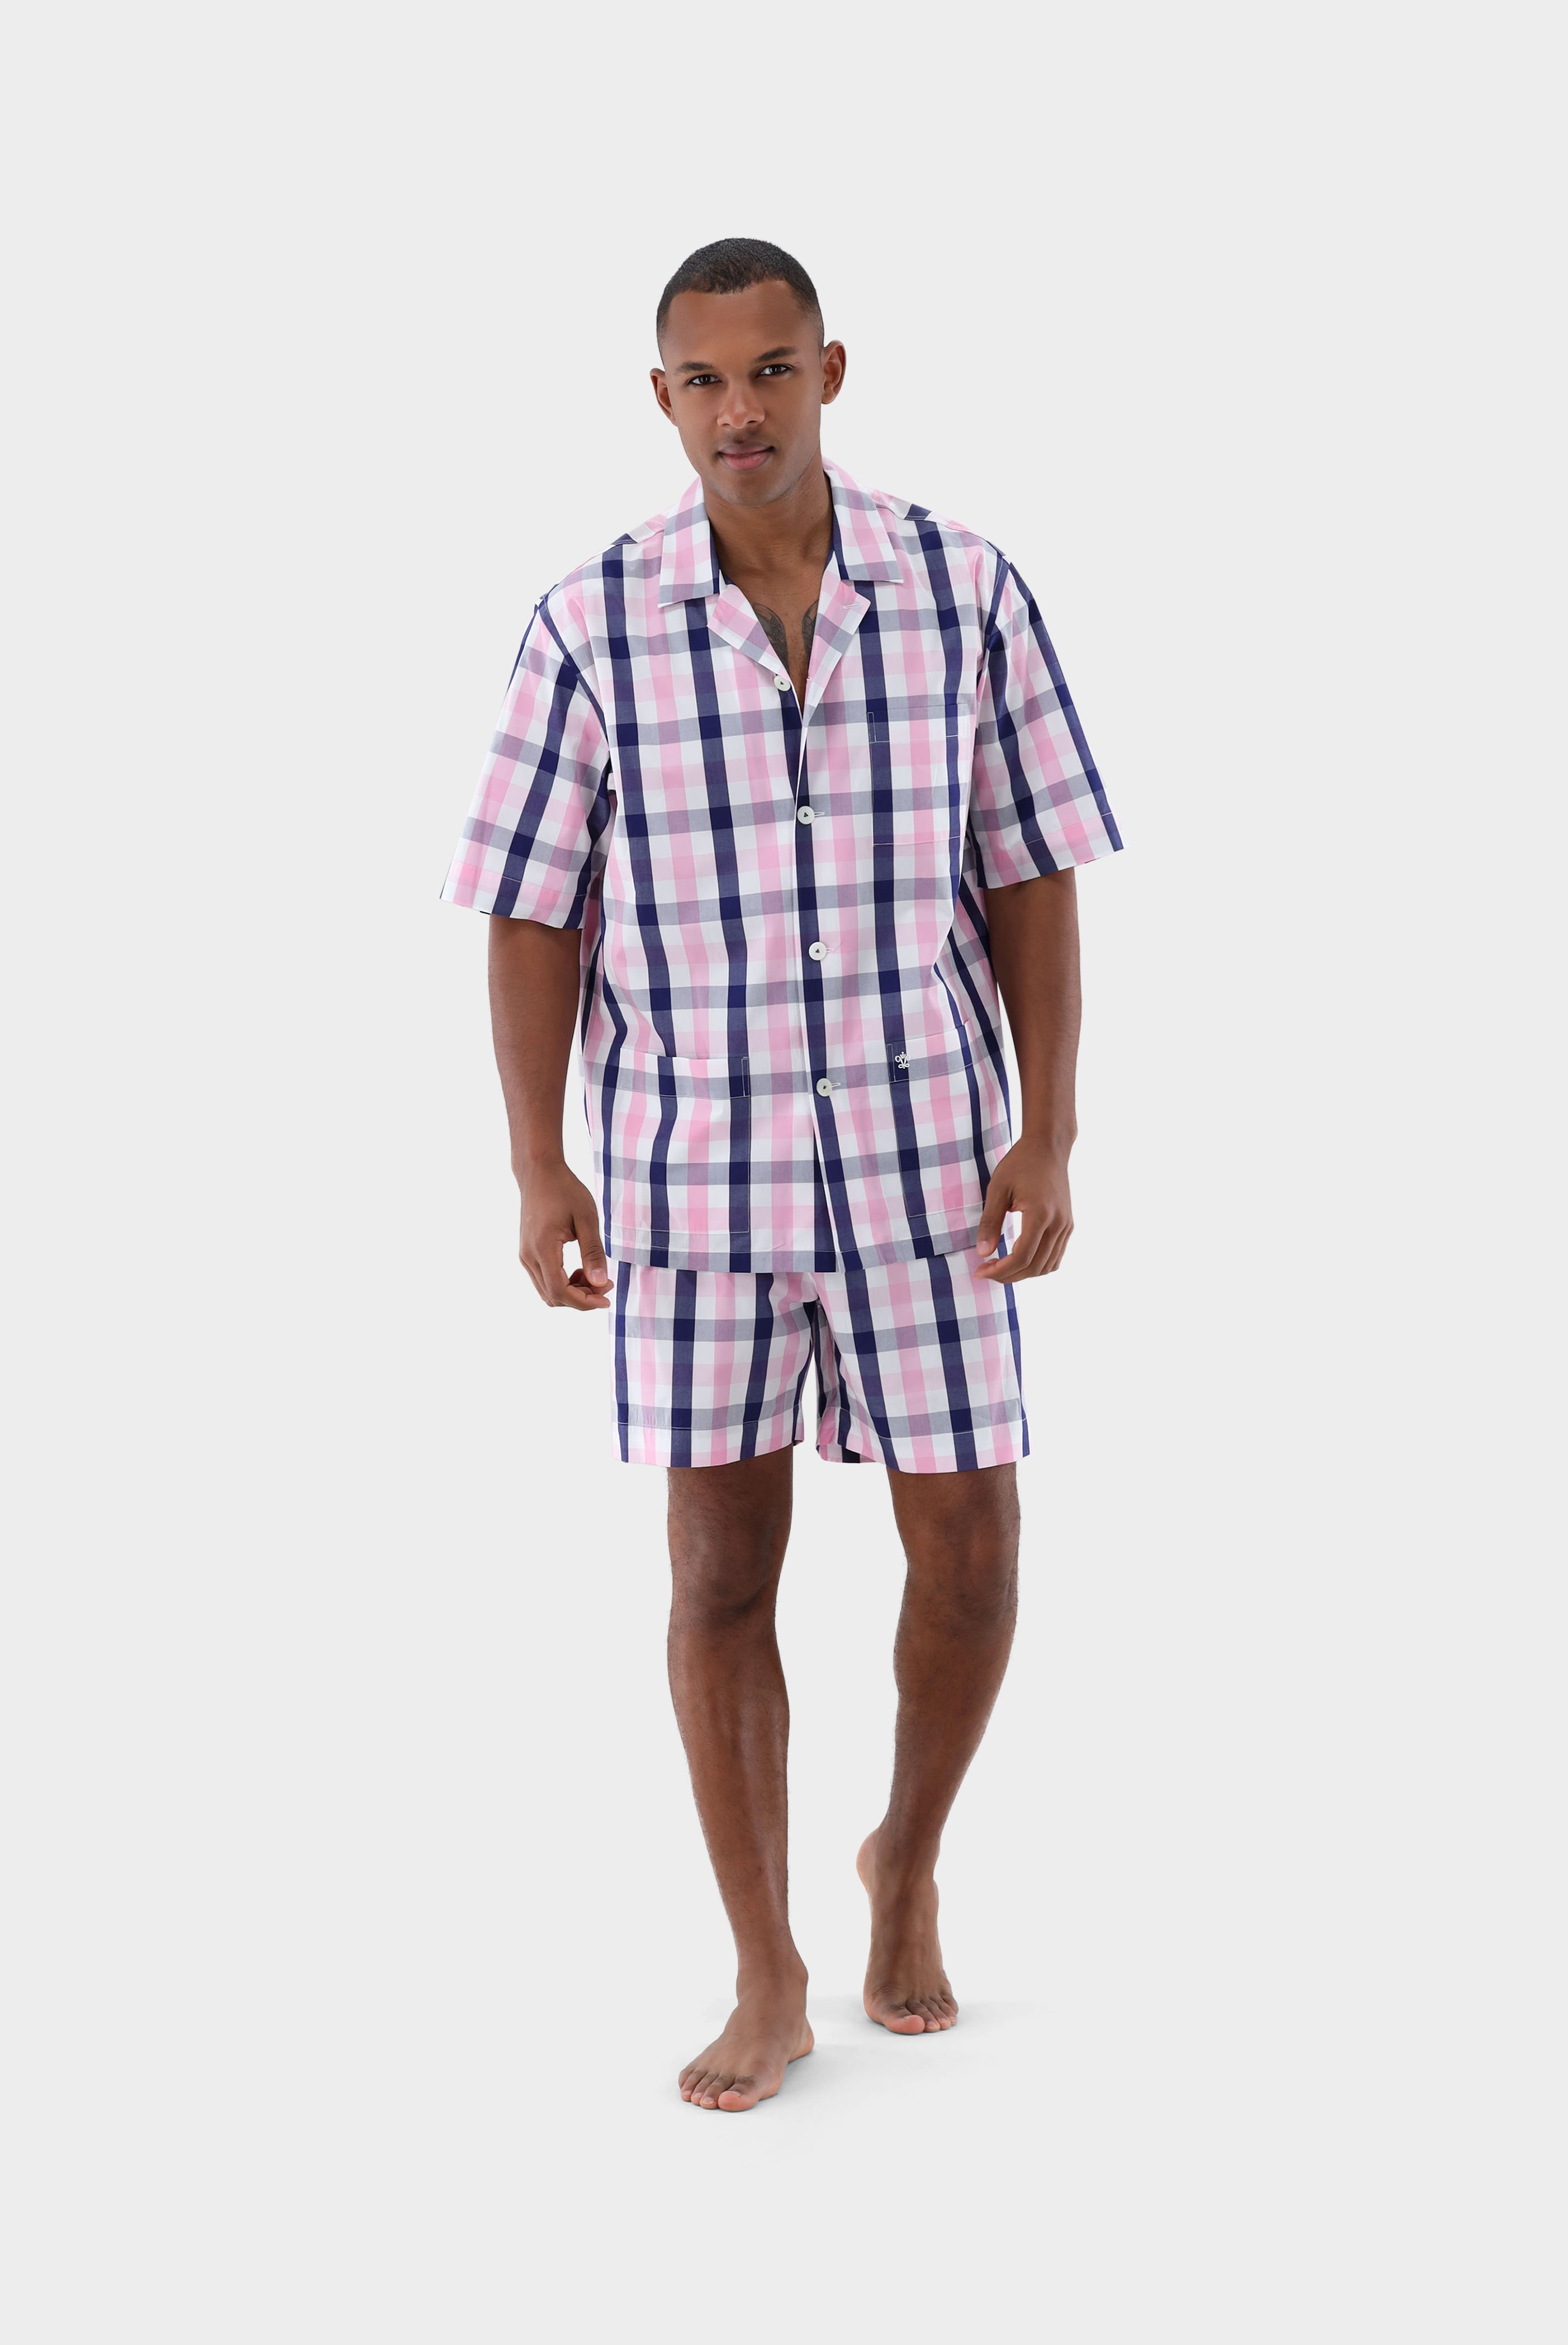 Pyjamas+Zweifarbiger Kurzpyjama mit Karomuster+91.1150.UC.151452.537.46